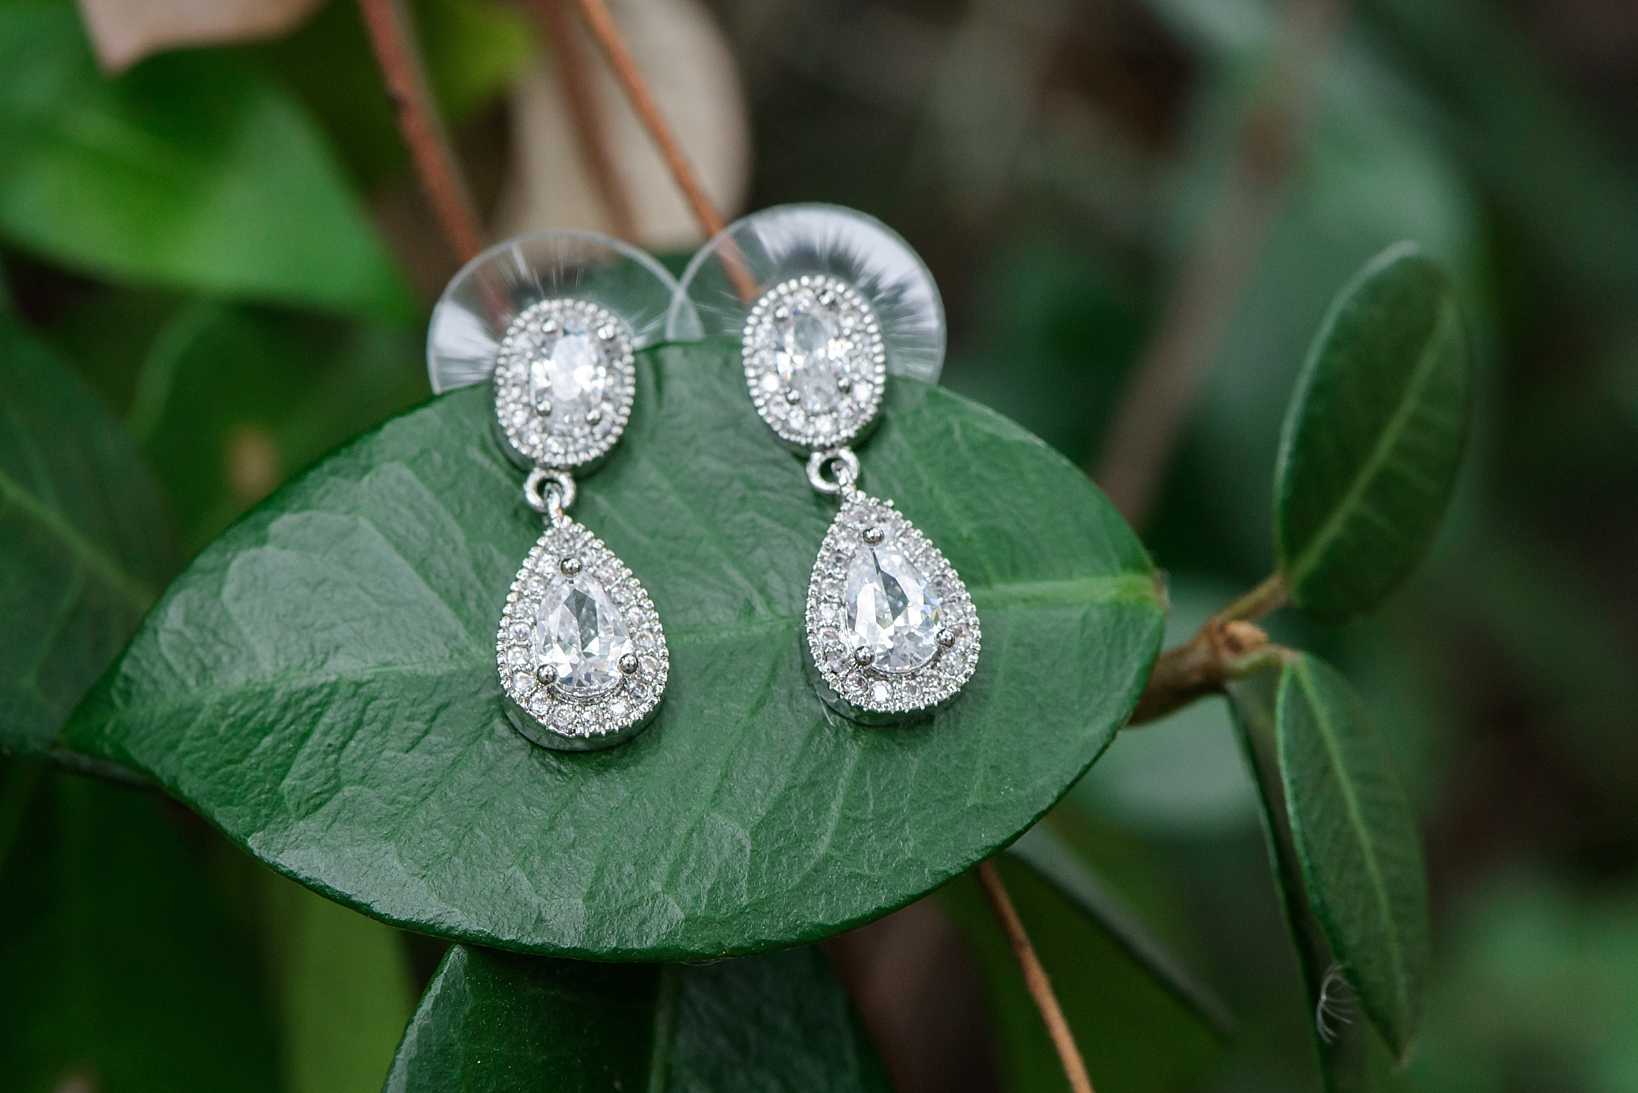 The wedding earrings on a leaf